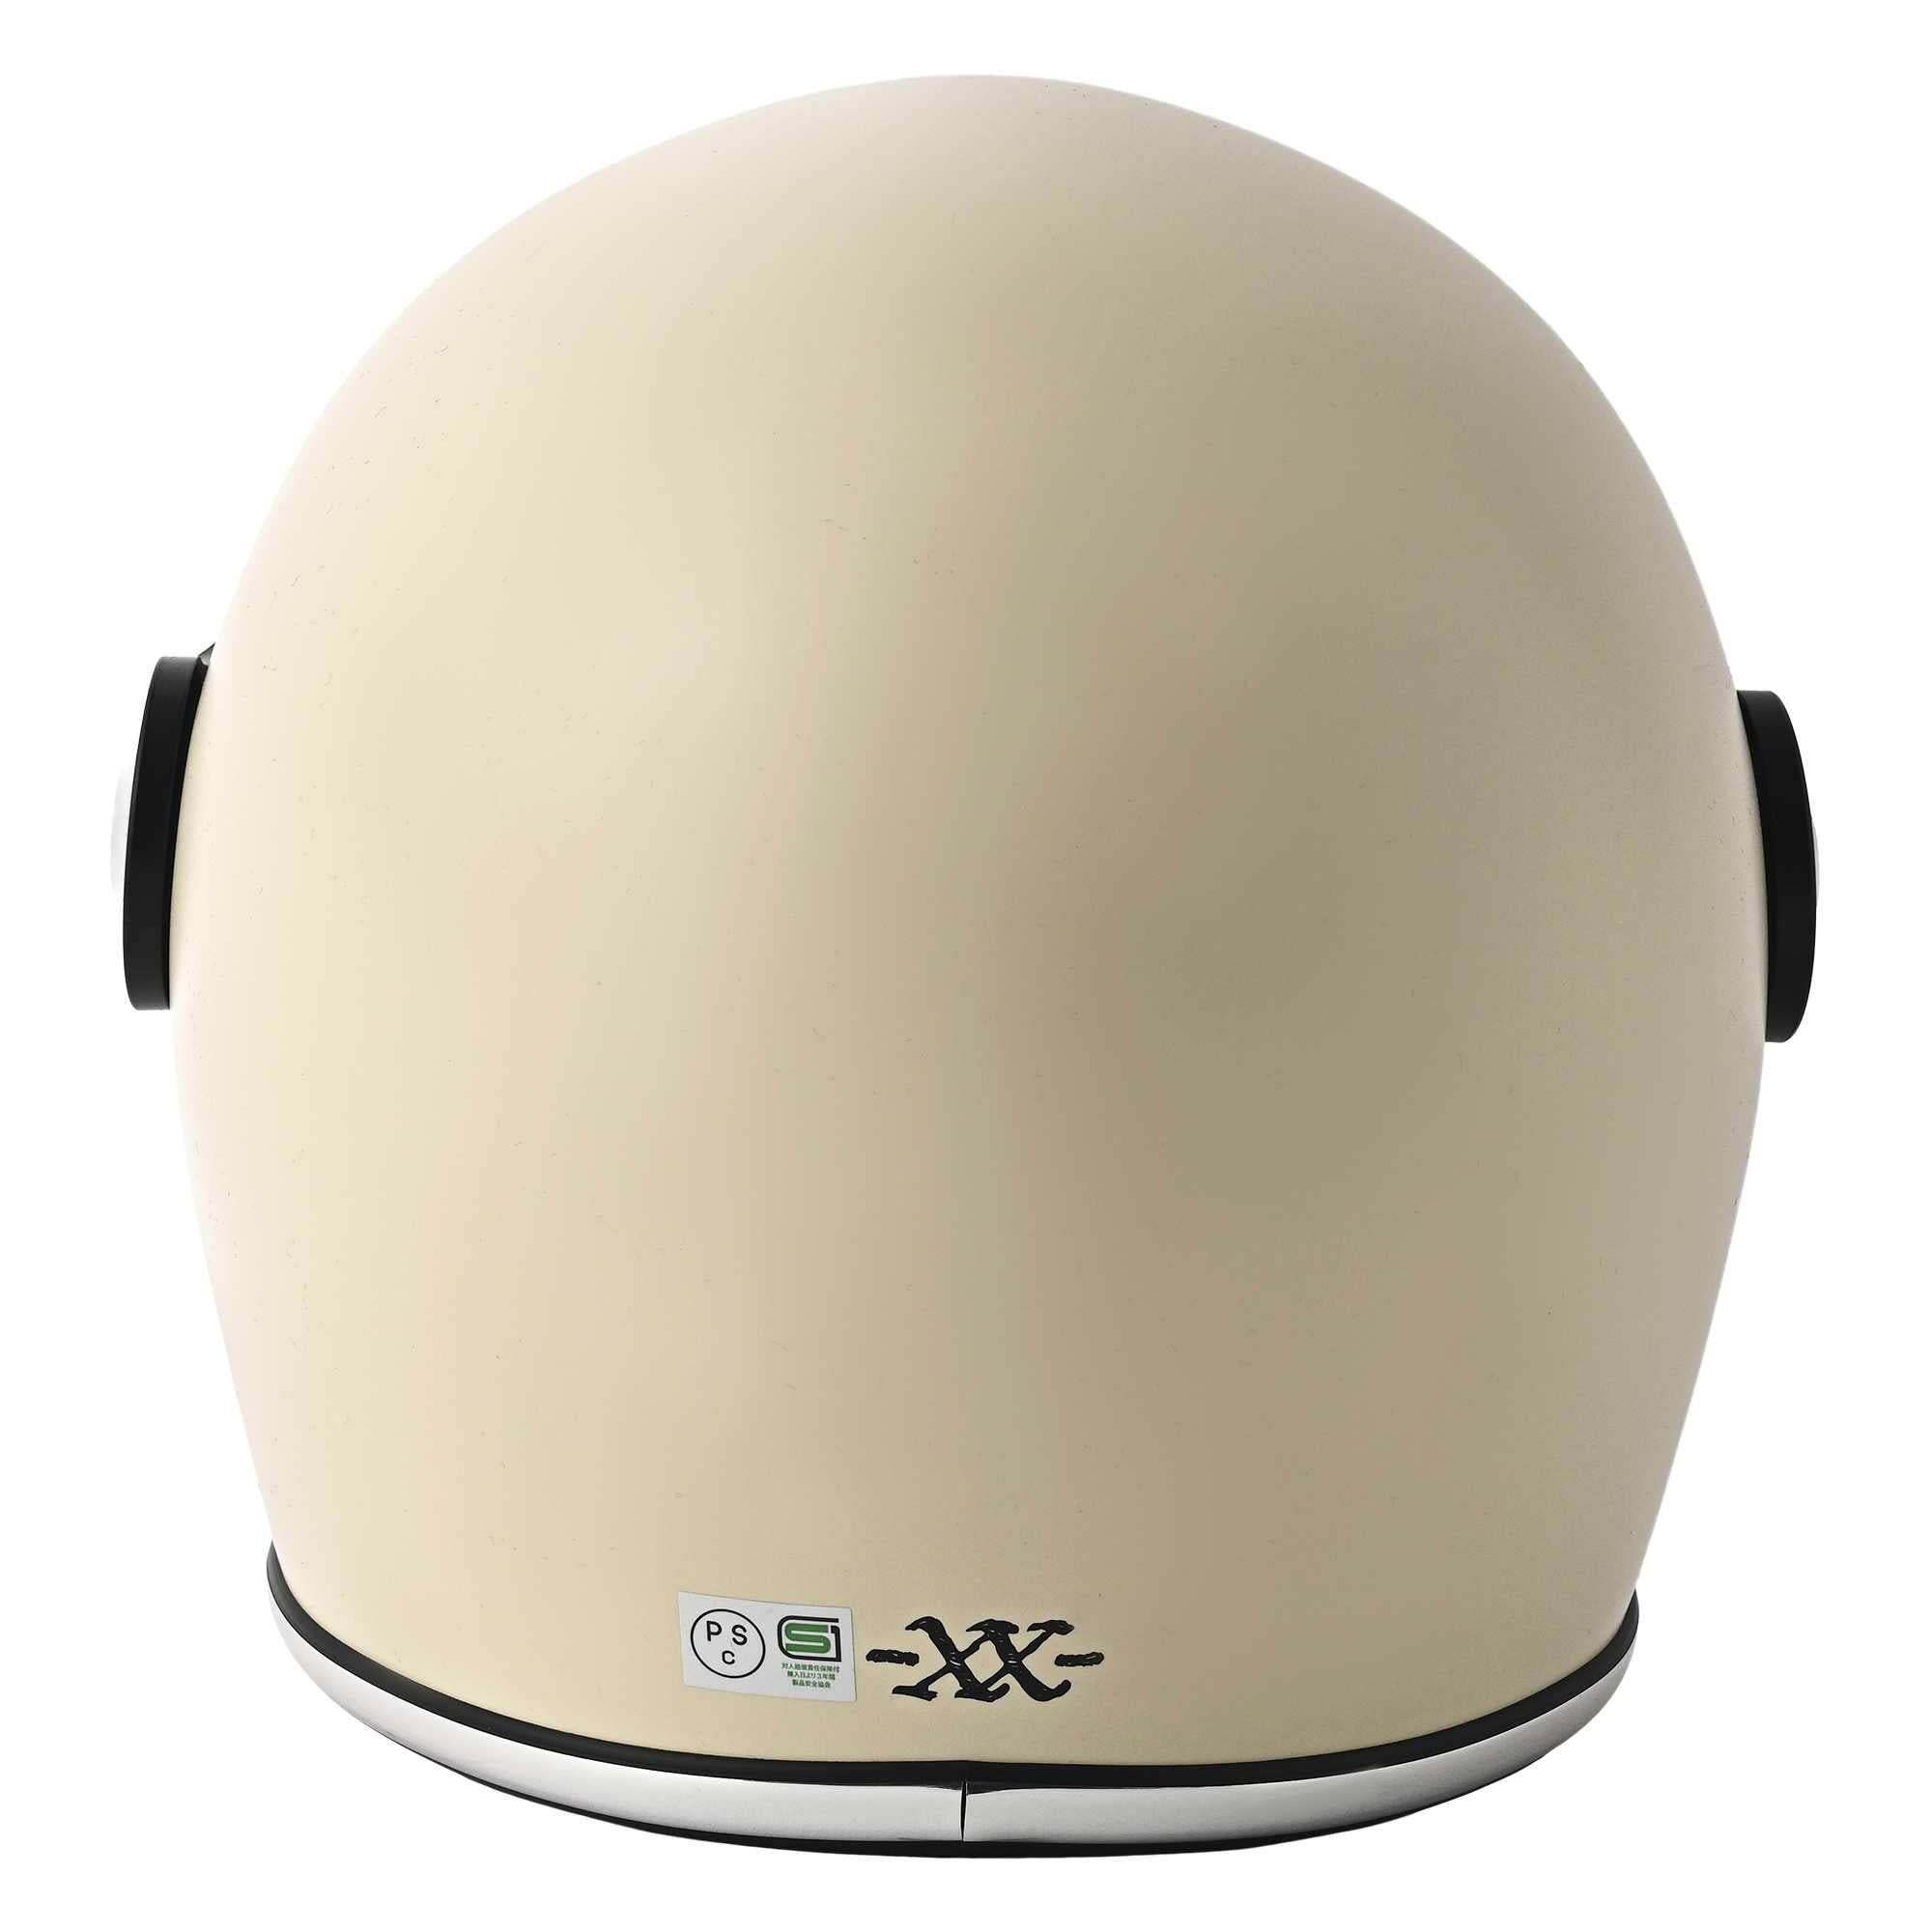 RIDEZ XX HELMET Limited Quantity Model OFF WHITE Full Face Motorcycle Helmet 